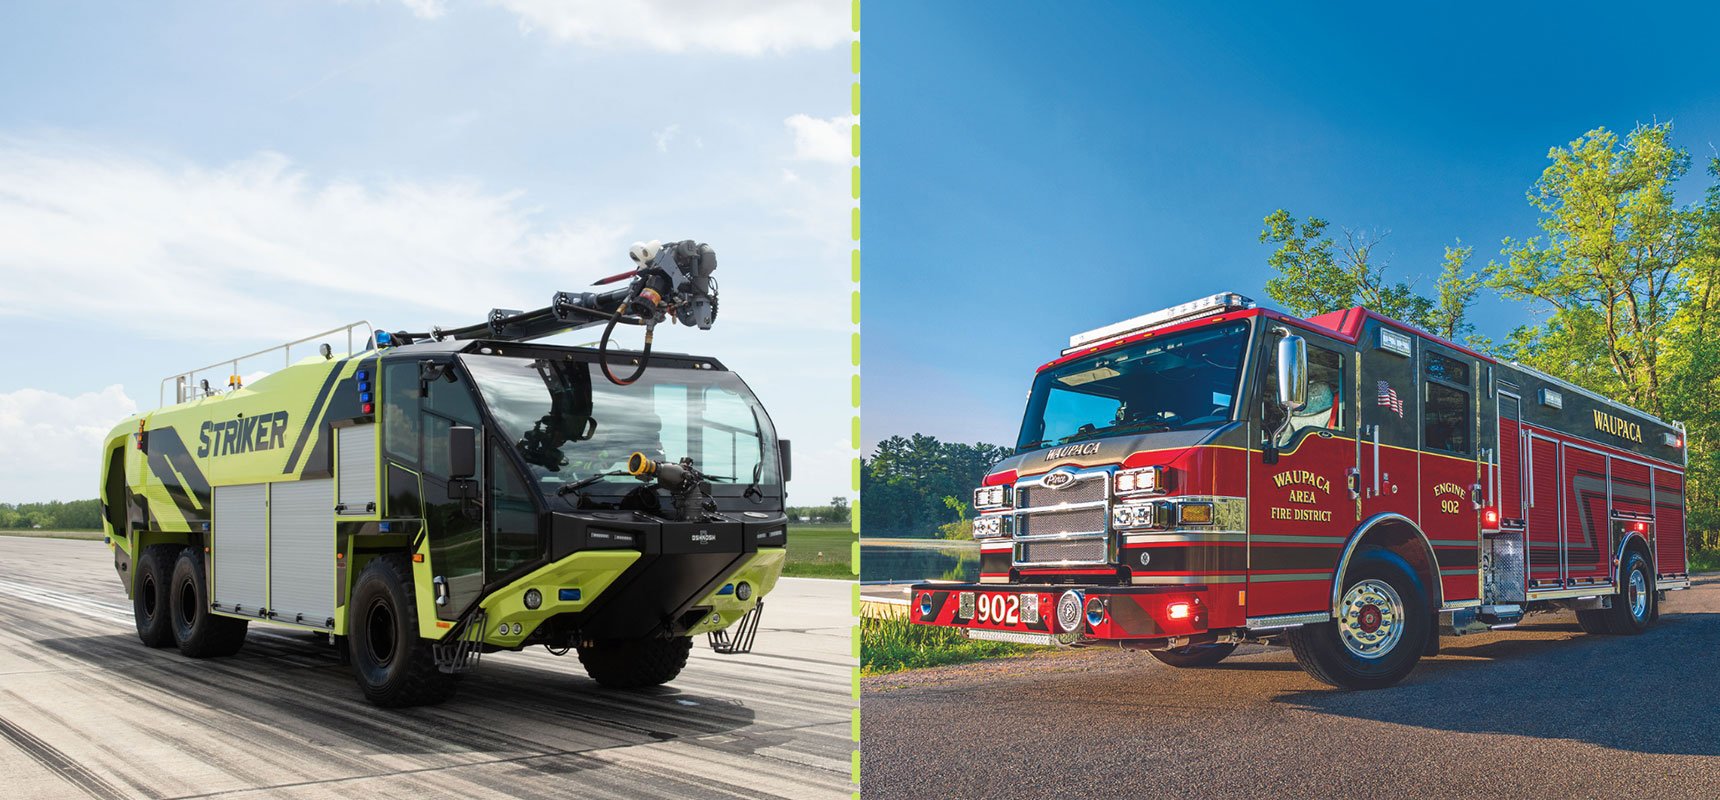 Oshkosh Airport Products ARFF vehicle compared to a Pierce Manufacturing municipal fire truck